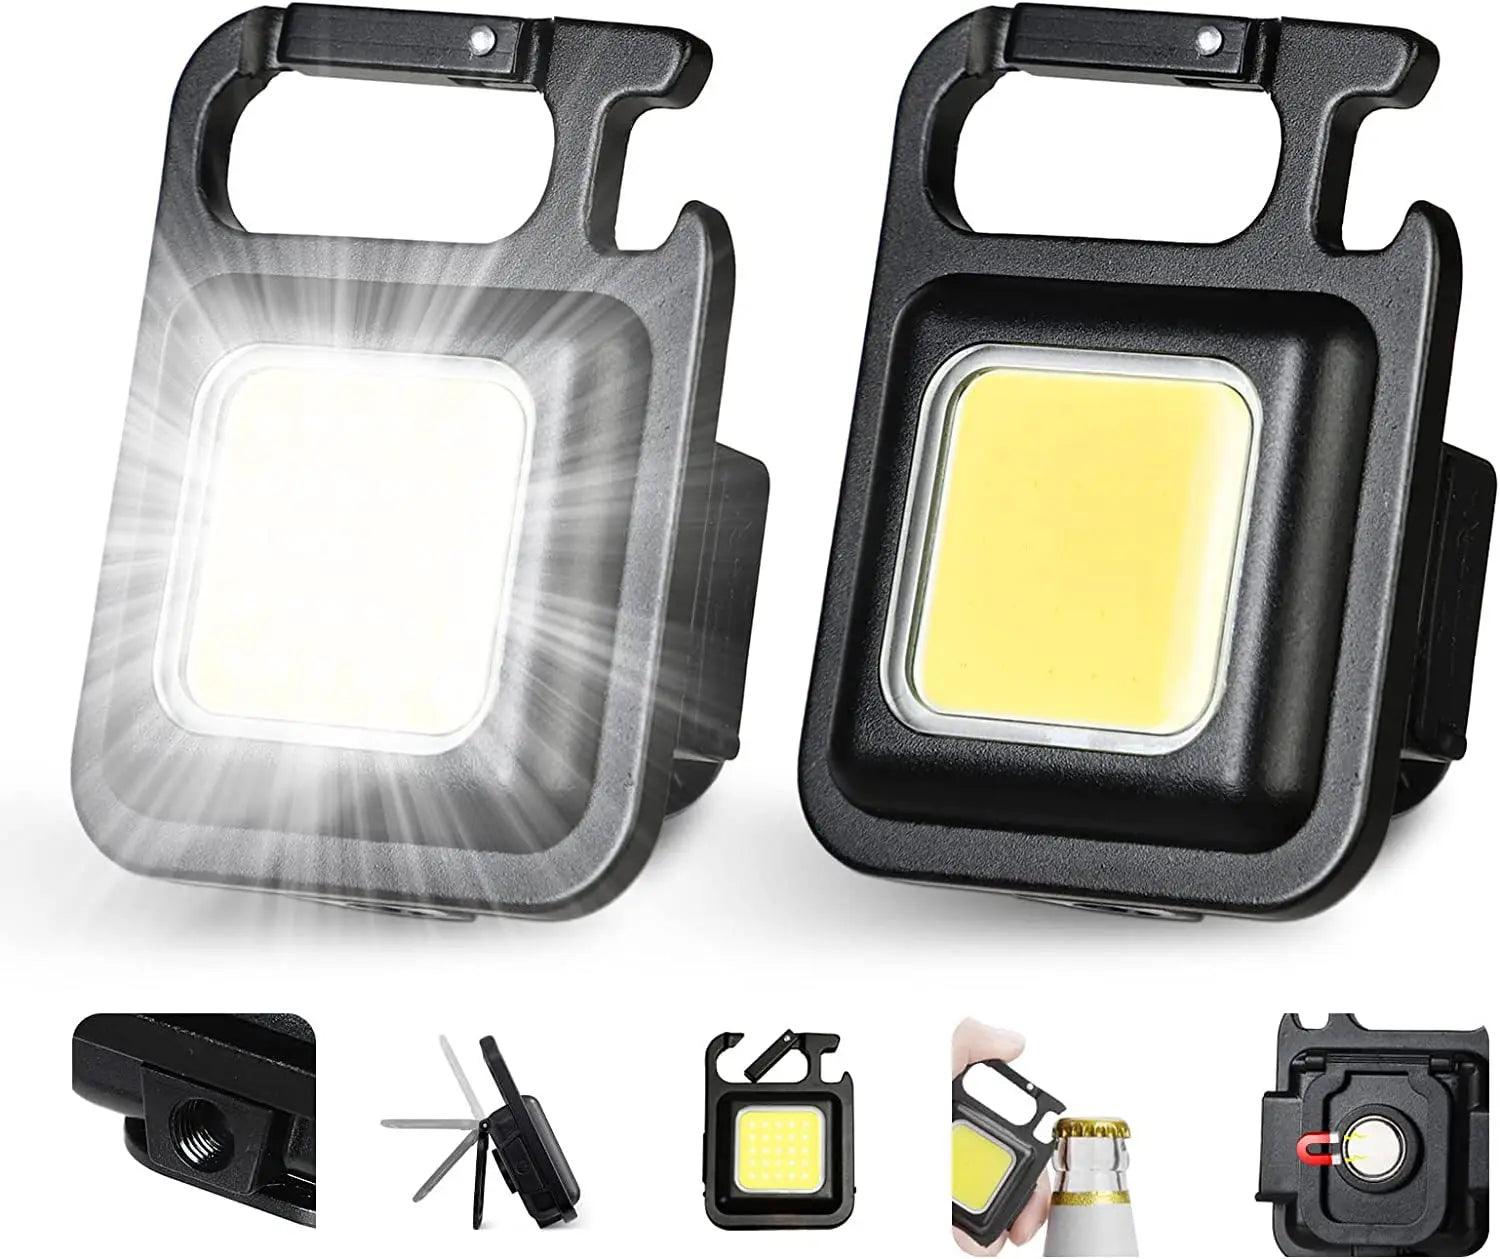 Adventure Illuminator: Portable Mini LED Work Light & Keychain Flashlight  ourlum.com   